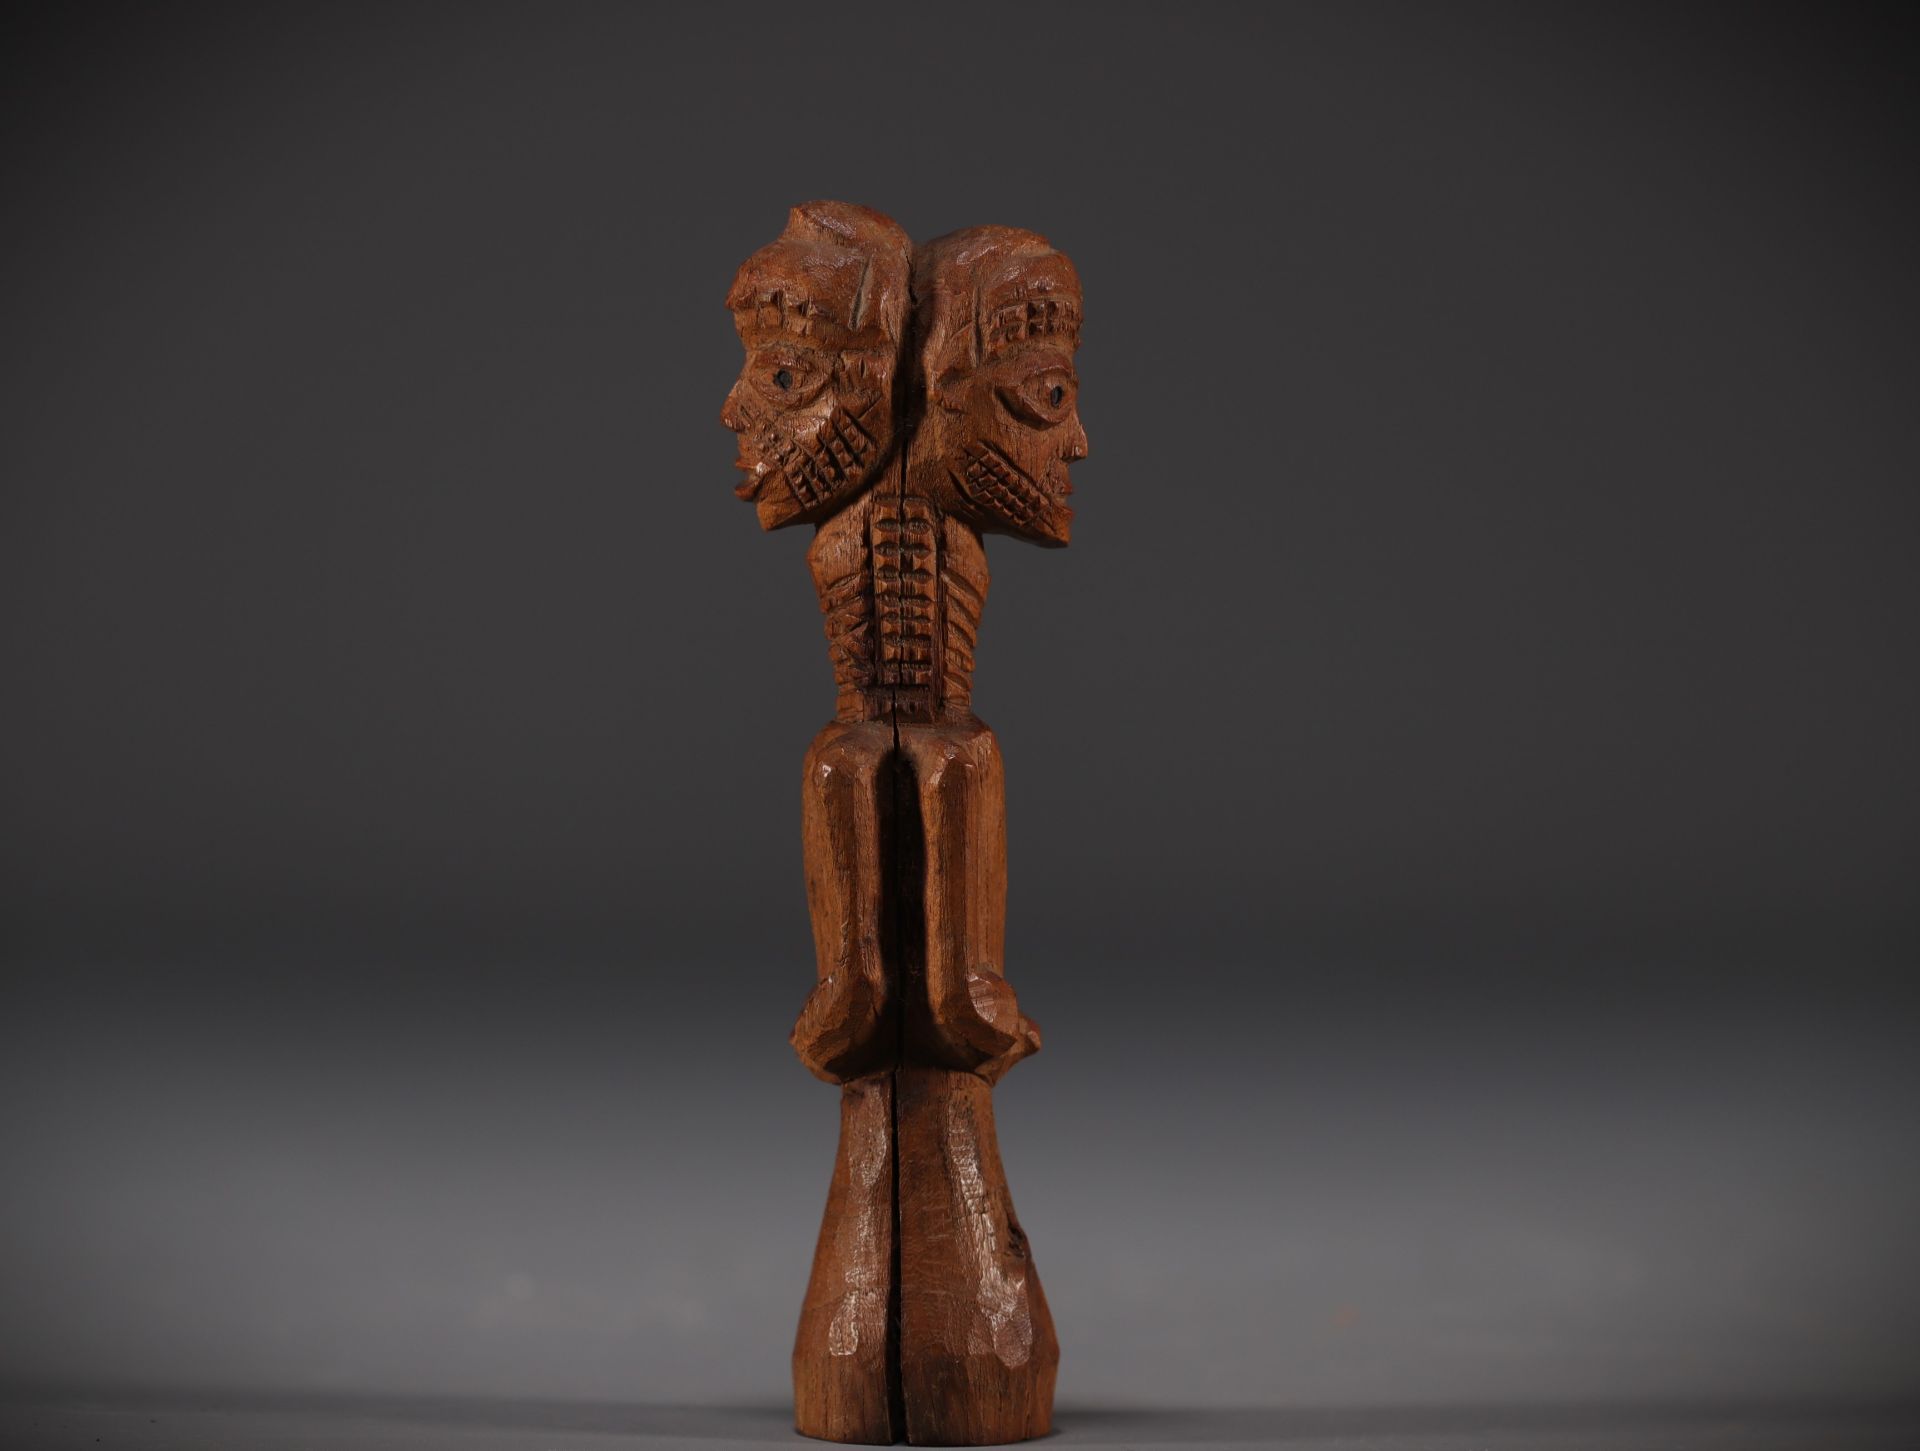 Lulua - Janus figure - Rep.Dem.Congo - Image 3 of 4